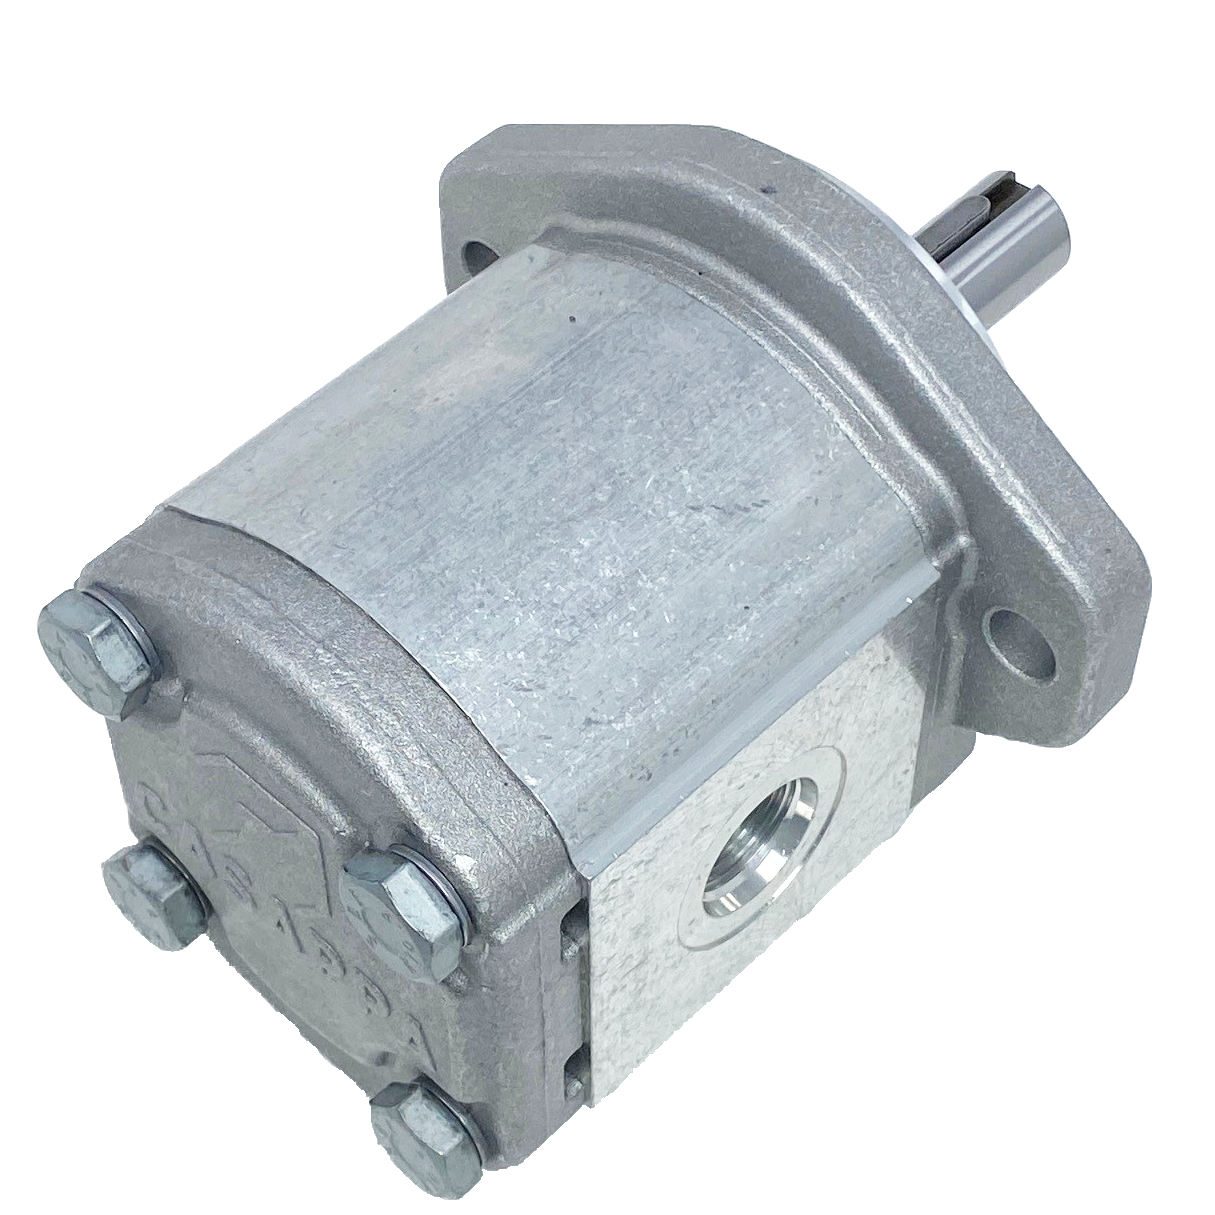 PLM20.16B0-49S1-LOC/OD-N-EL : Casappa Polaris Gear Motor, 16.85cc, 3625psi Rated, 3000RPM, Reversible Interior Drain, 3/4" Bore x 3/16" Key Shaft, SAE A 2-Bolt Flange, 0.625 (5/8") #10 SAE Inlet, 0.75 (3/4") #12 SAE Outlet, Aluminum Body & Flange